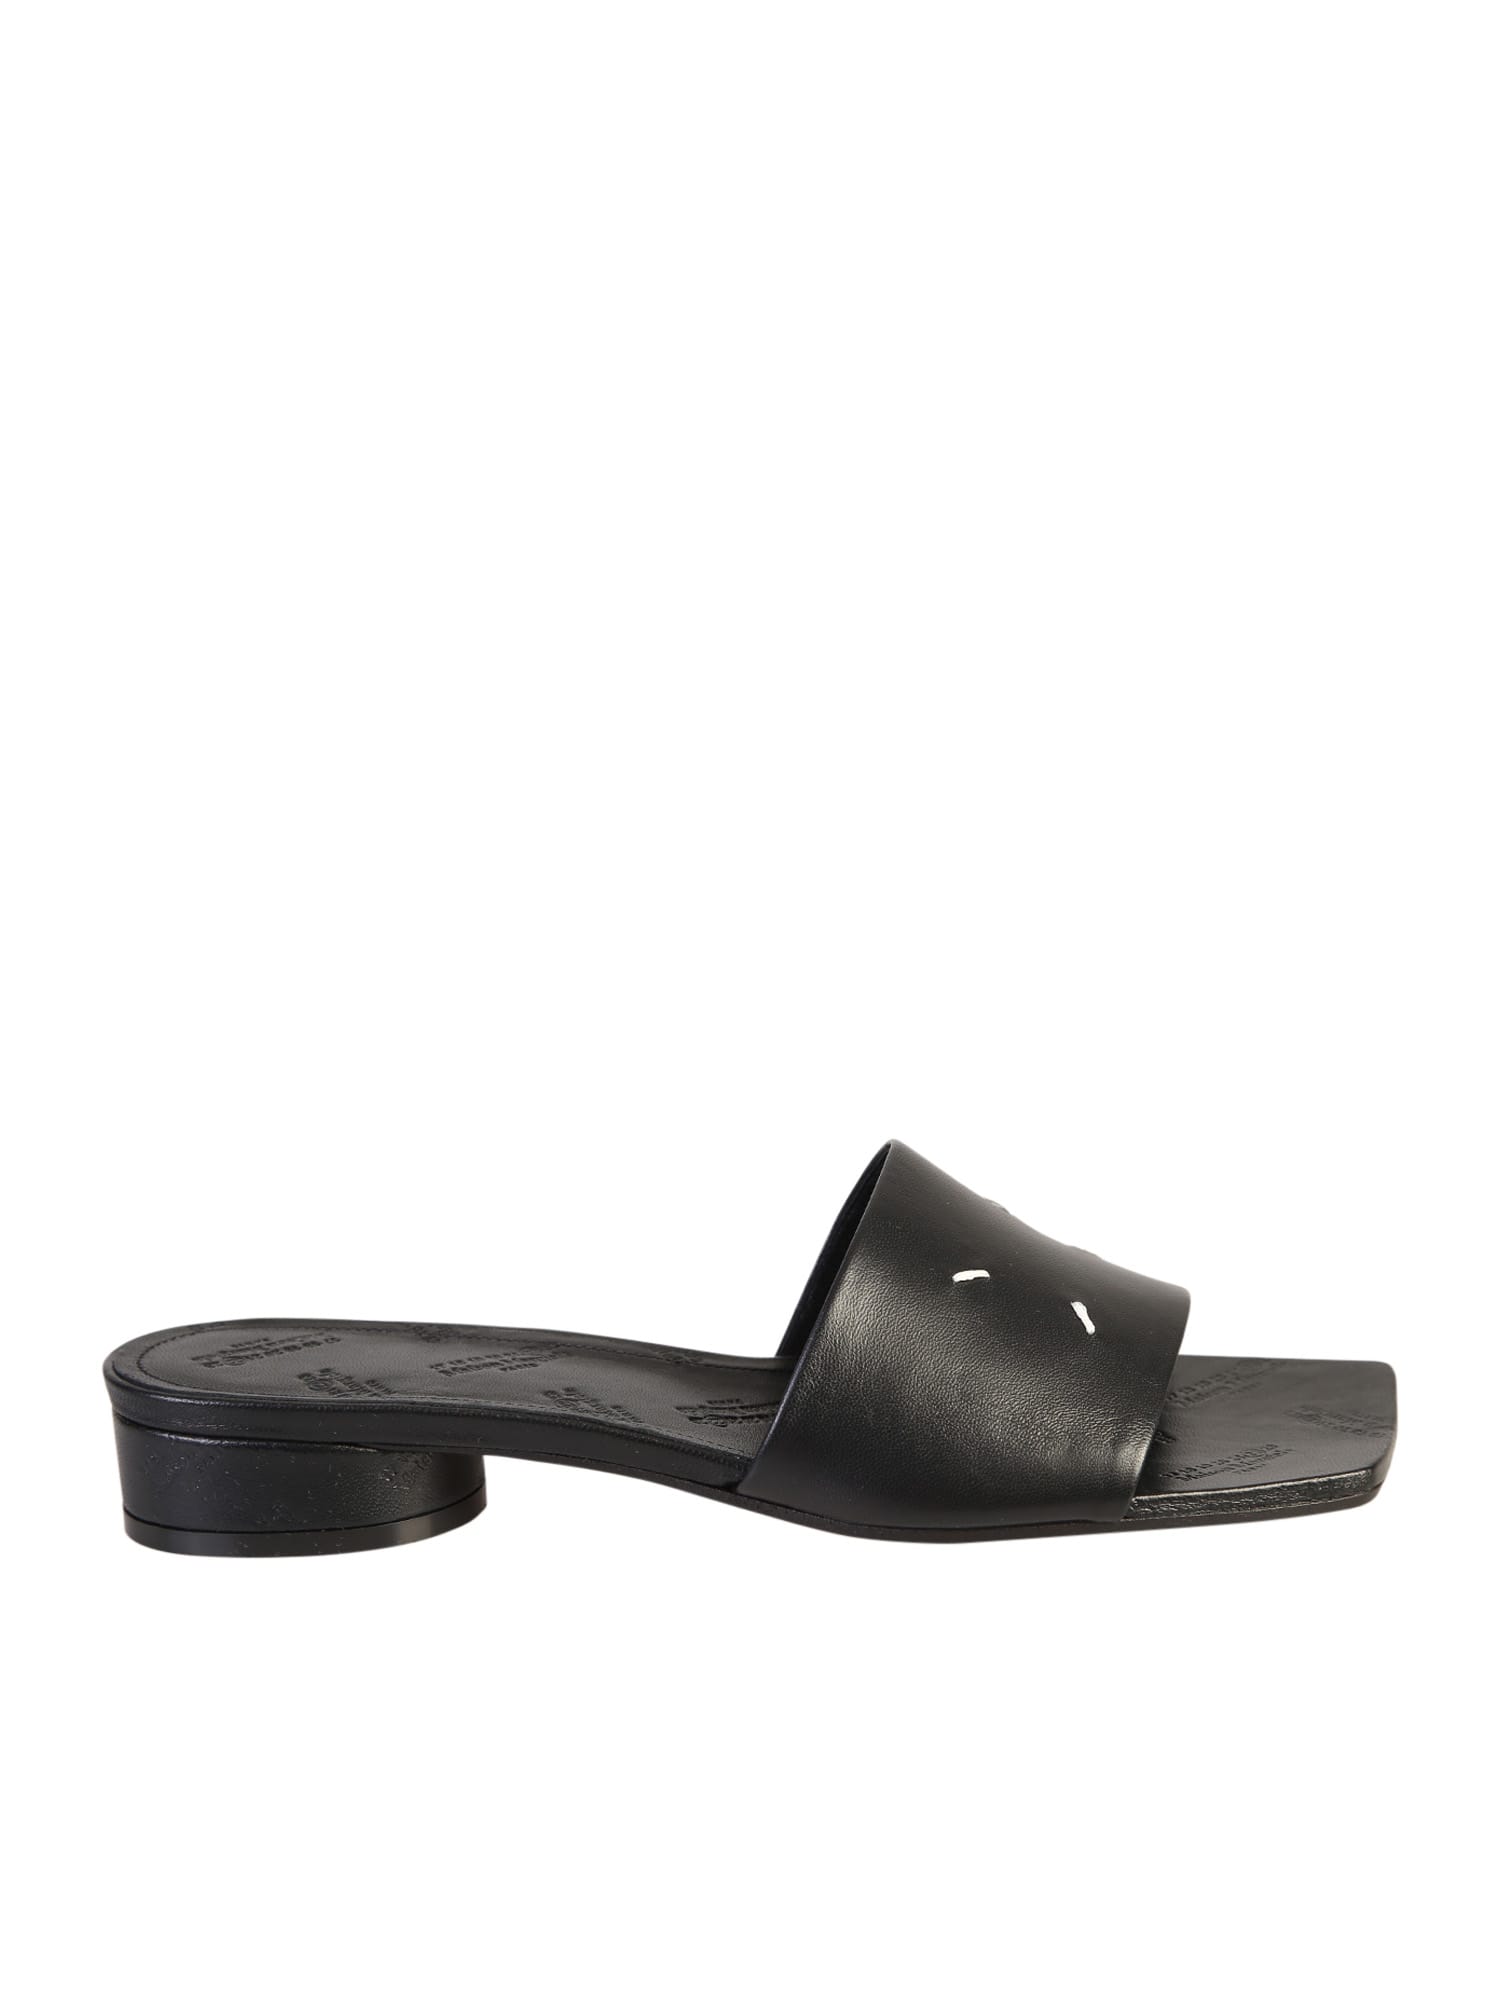 Buy Maison Margiela Black Sandals online, shop Maison Margiela shoes with free shipping